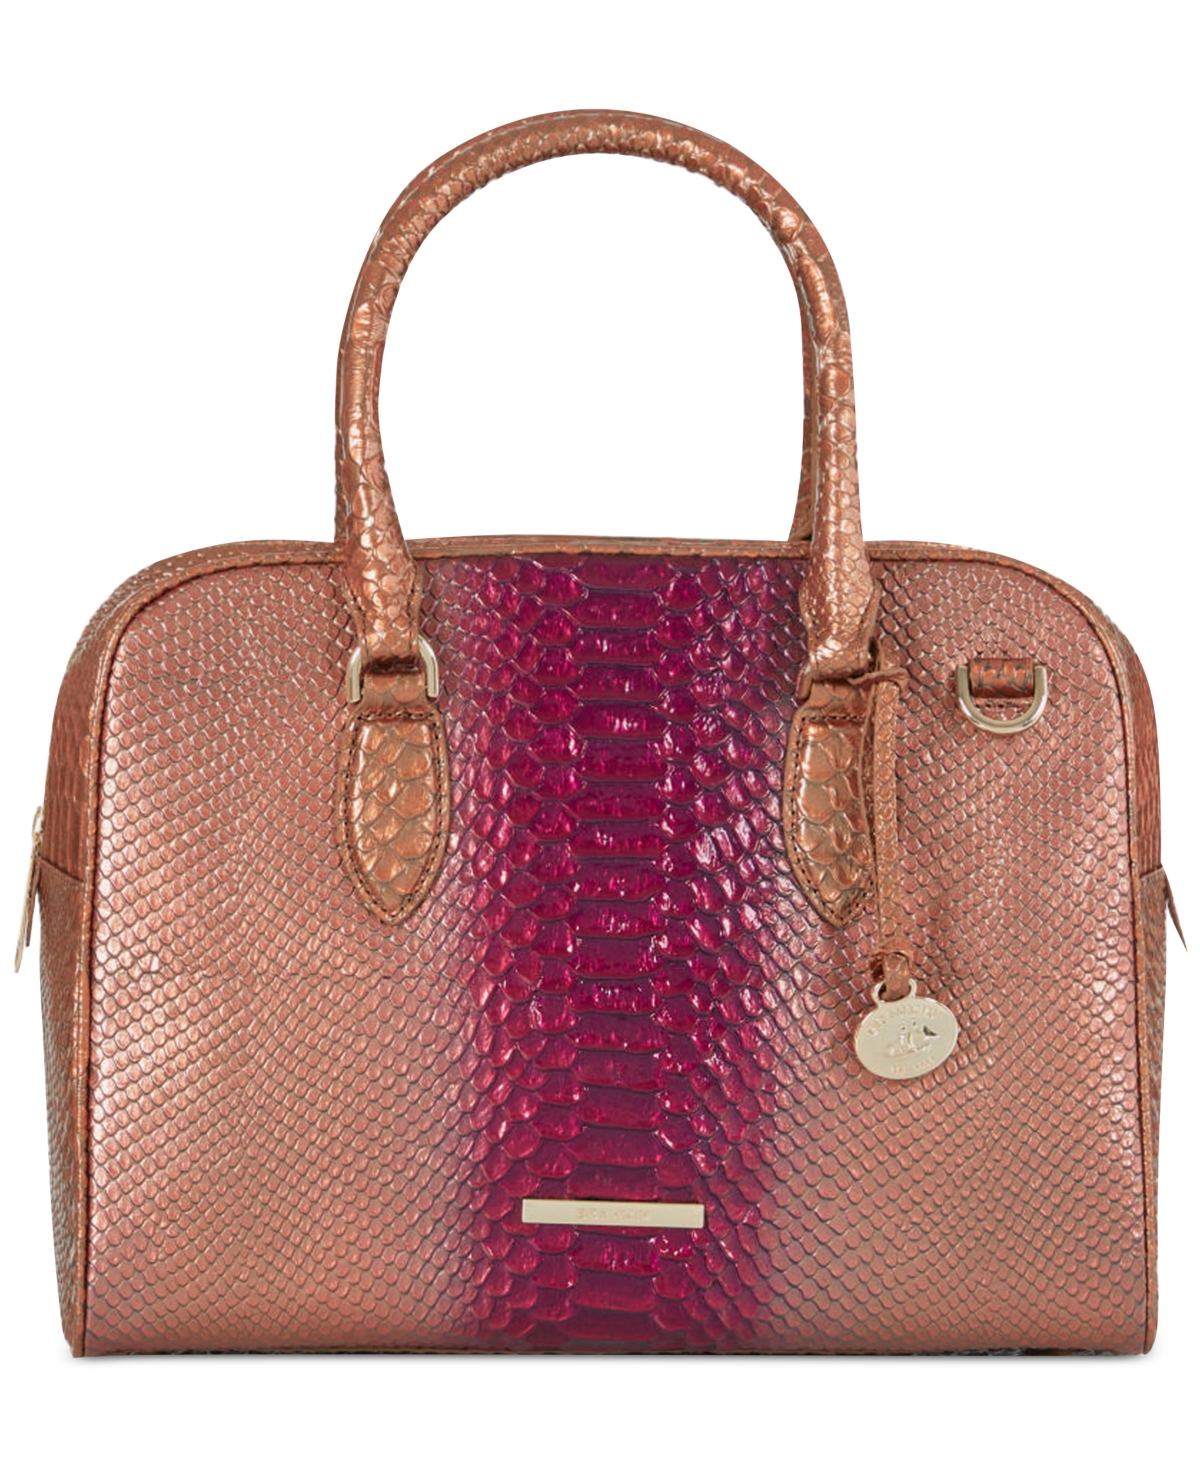 ZHAGHMIN Brahmin Handbags Clearance Multifunction Ladies Shoulder